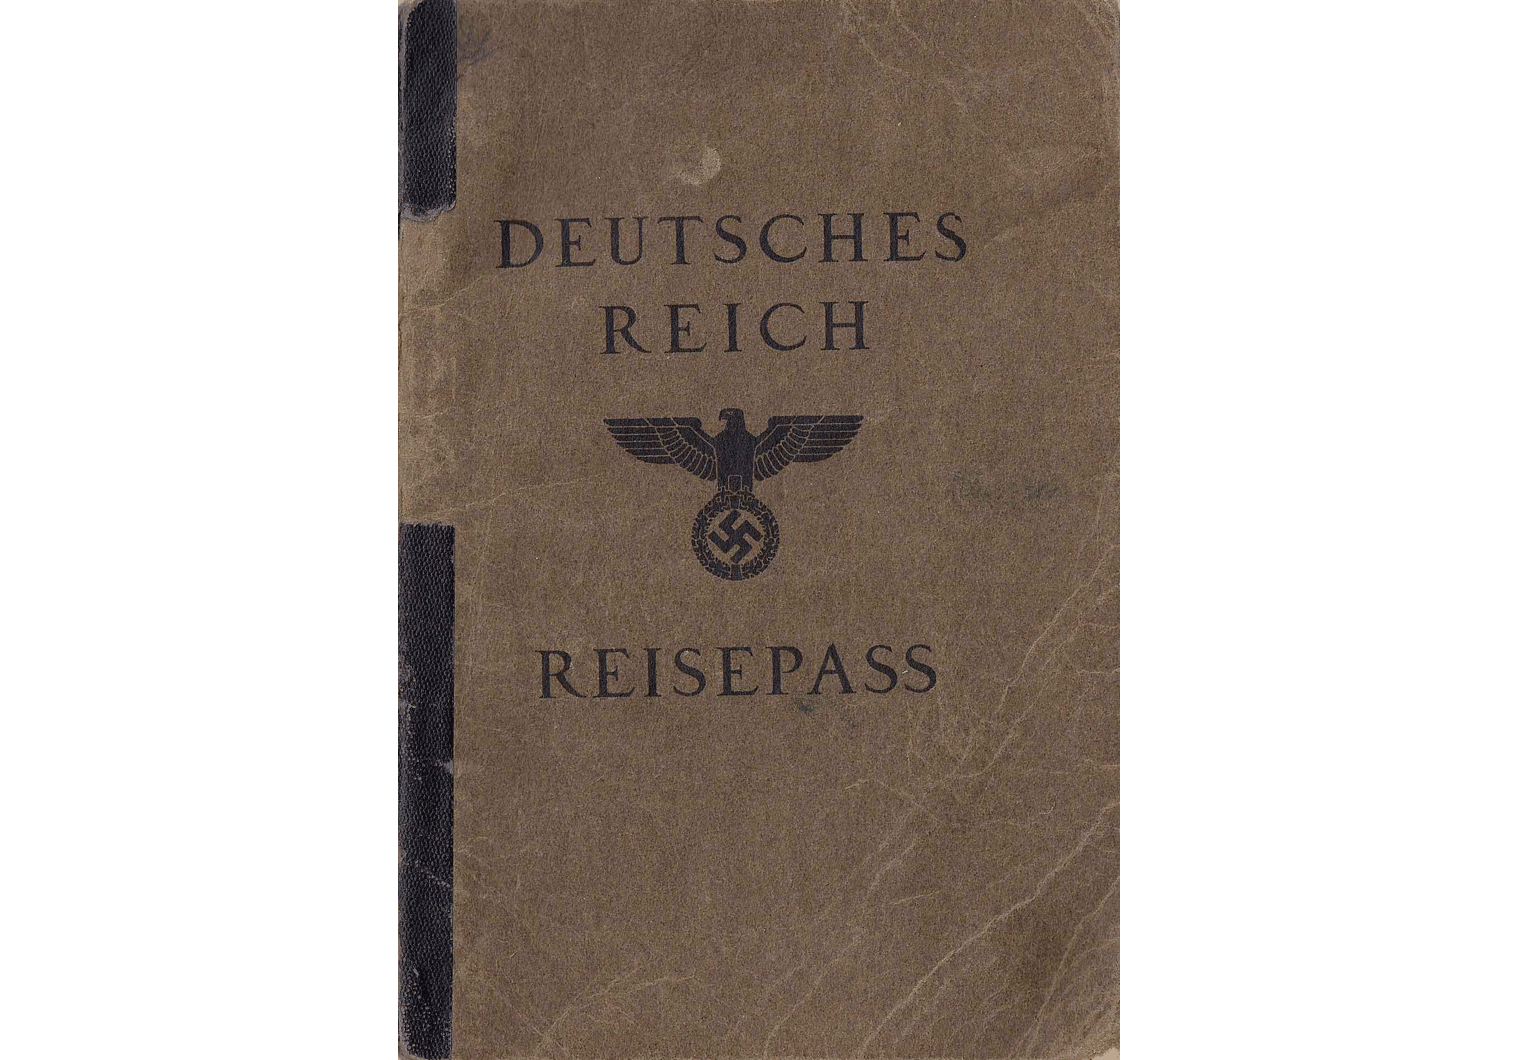 WW2 German passport from Indonesia